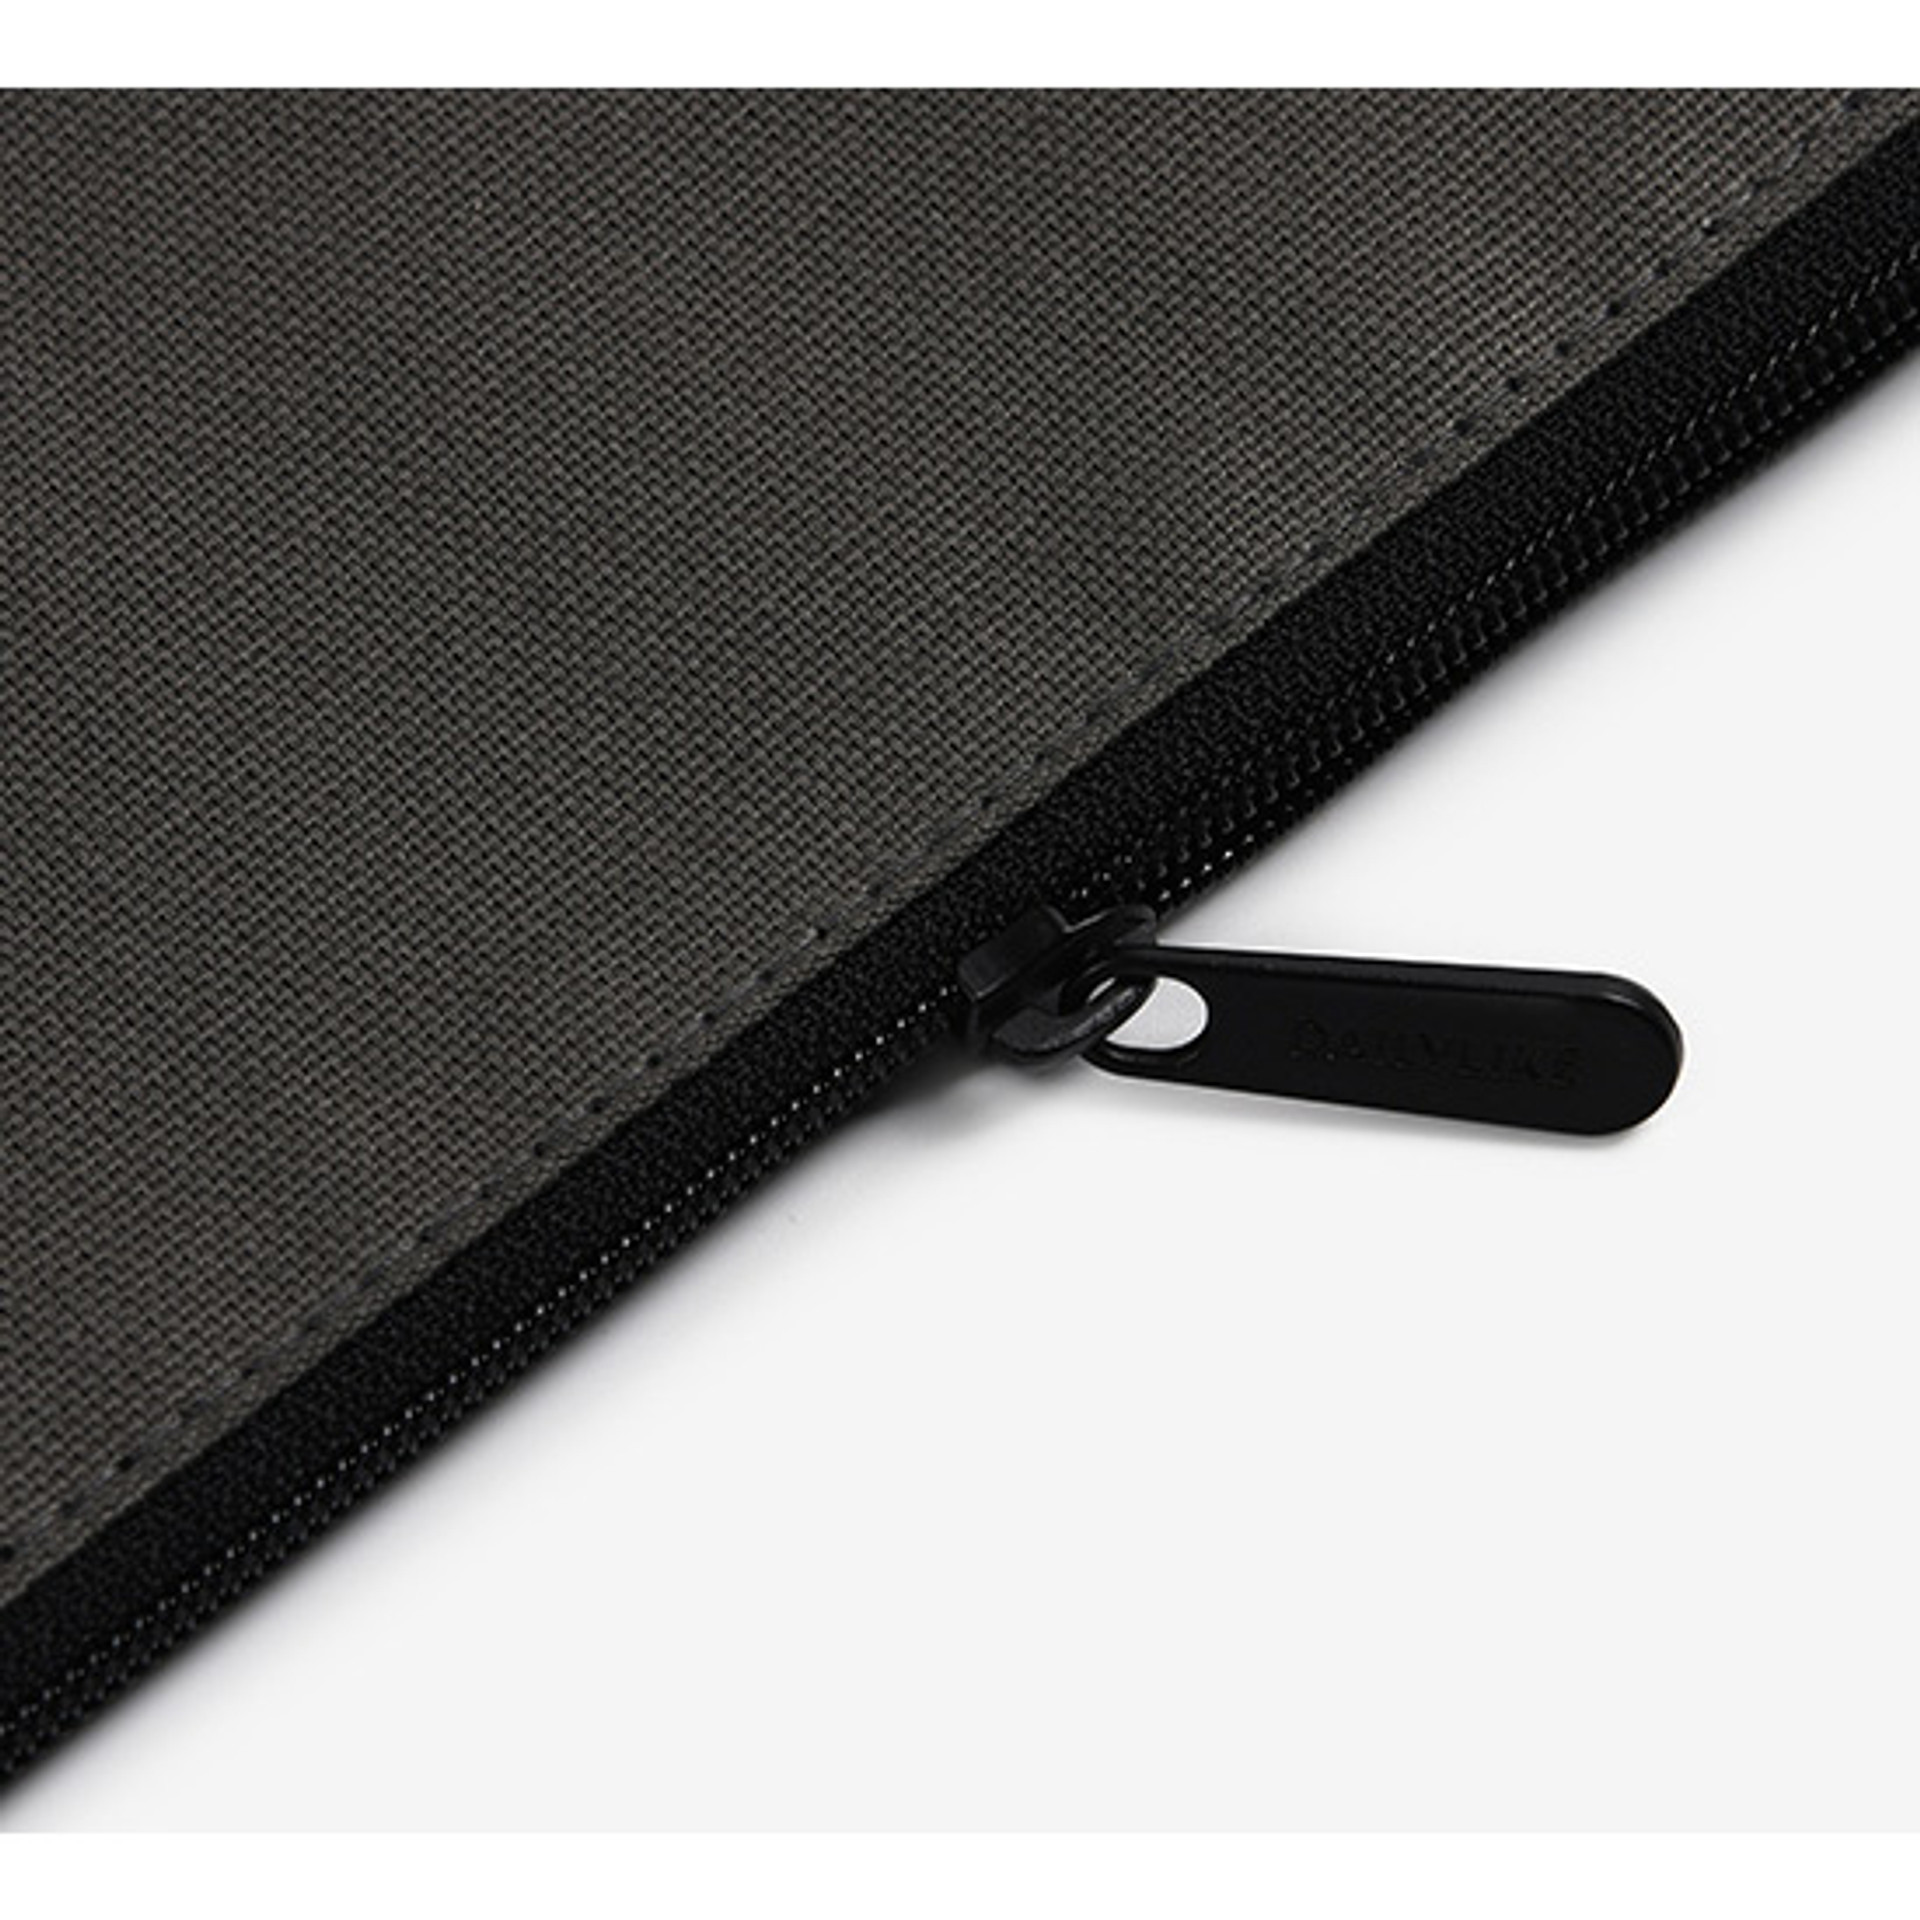 Embroidery rectangle fabric zipper pouch - Hula hoop bear